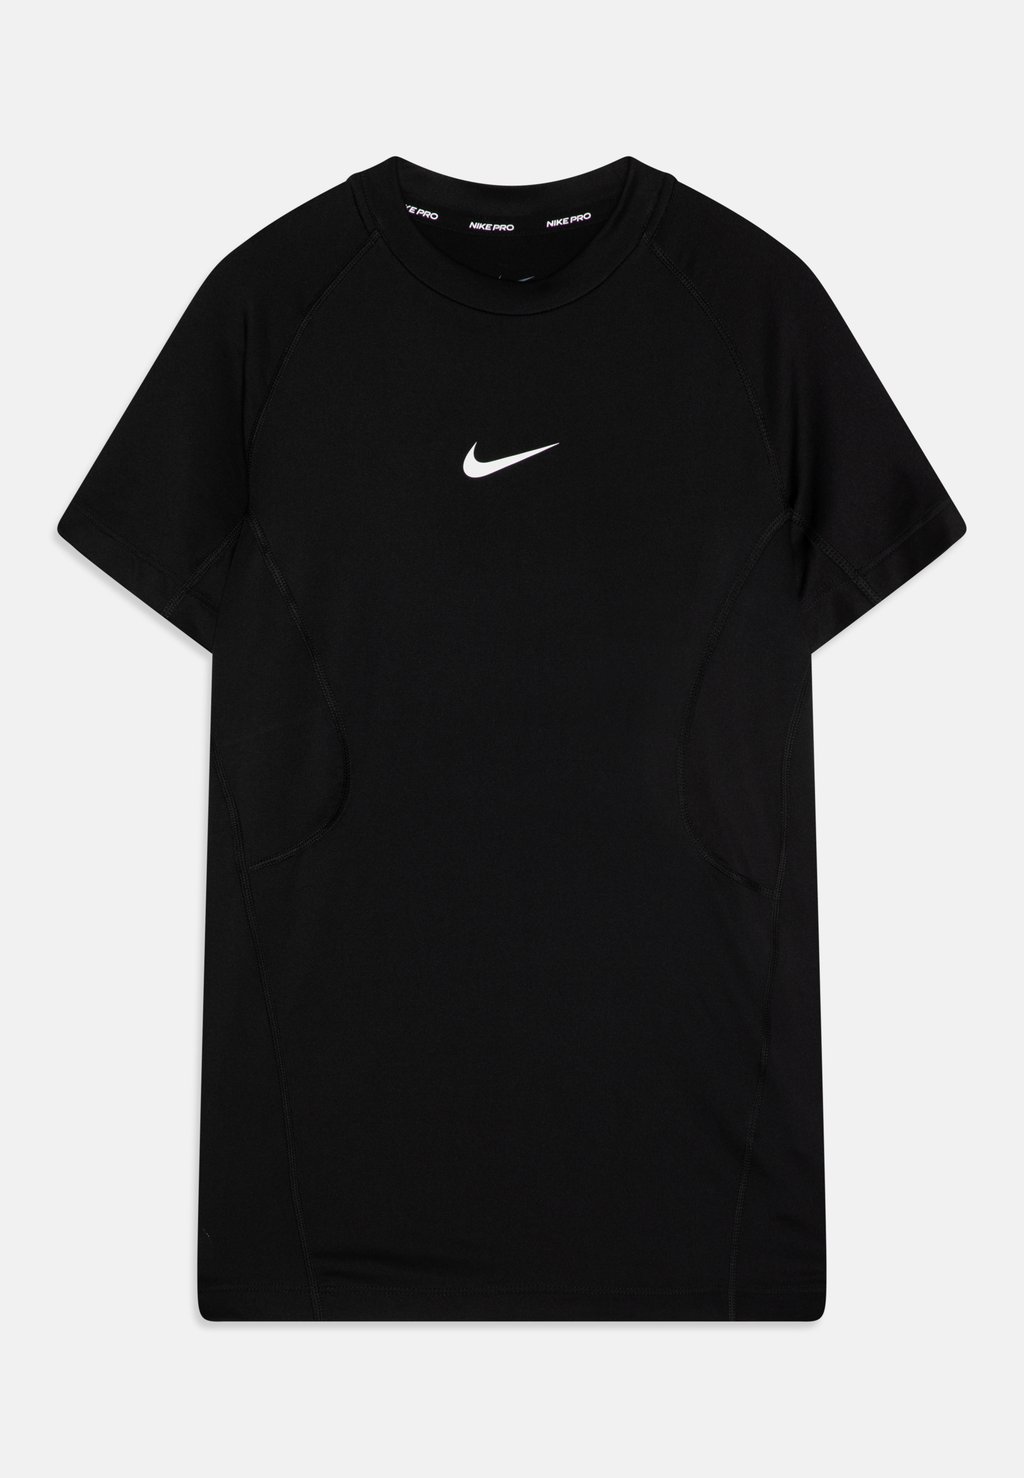 Спортивная футболка Df Unisex Nike, цвет black/white спортивная футболка df unisex nike цвет university red white